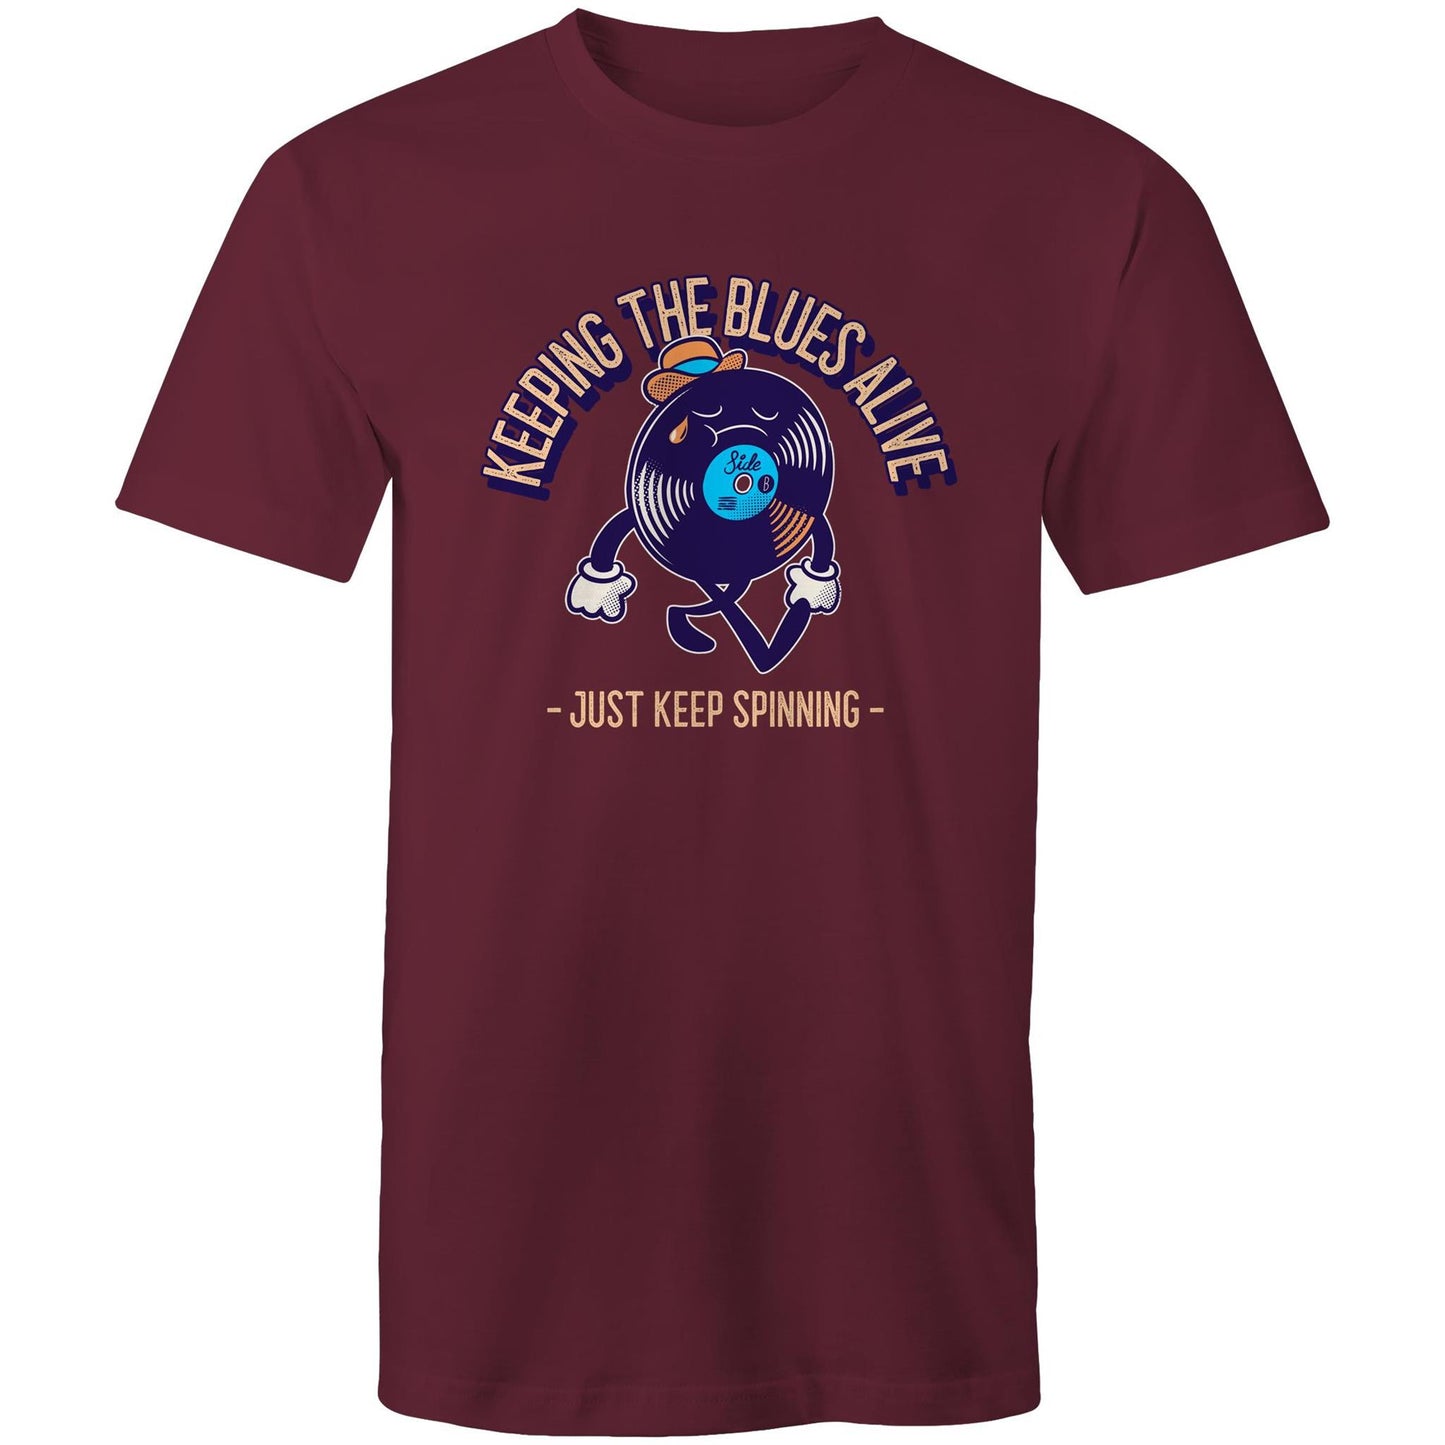 Keeping The Blues Alive - Mens T-Shirt Burgundy Mens T-shirt Music